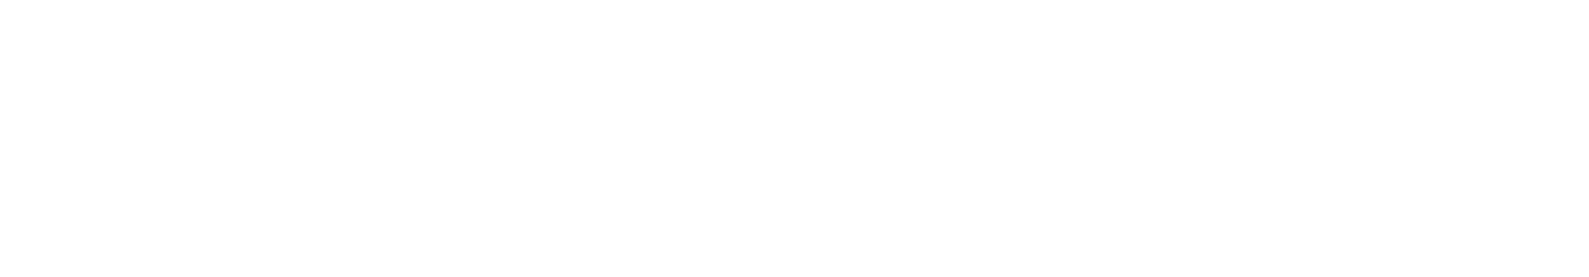 Nomura Holdings logo large for dark backgrounds (transparent PNG)